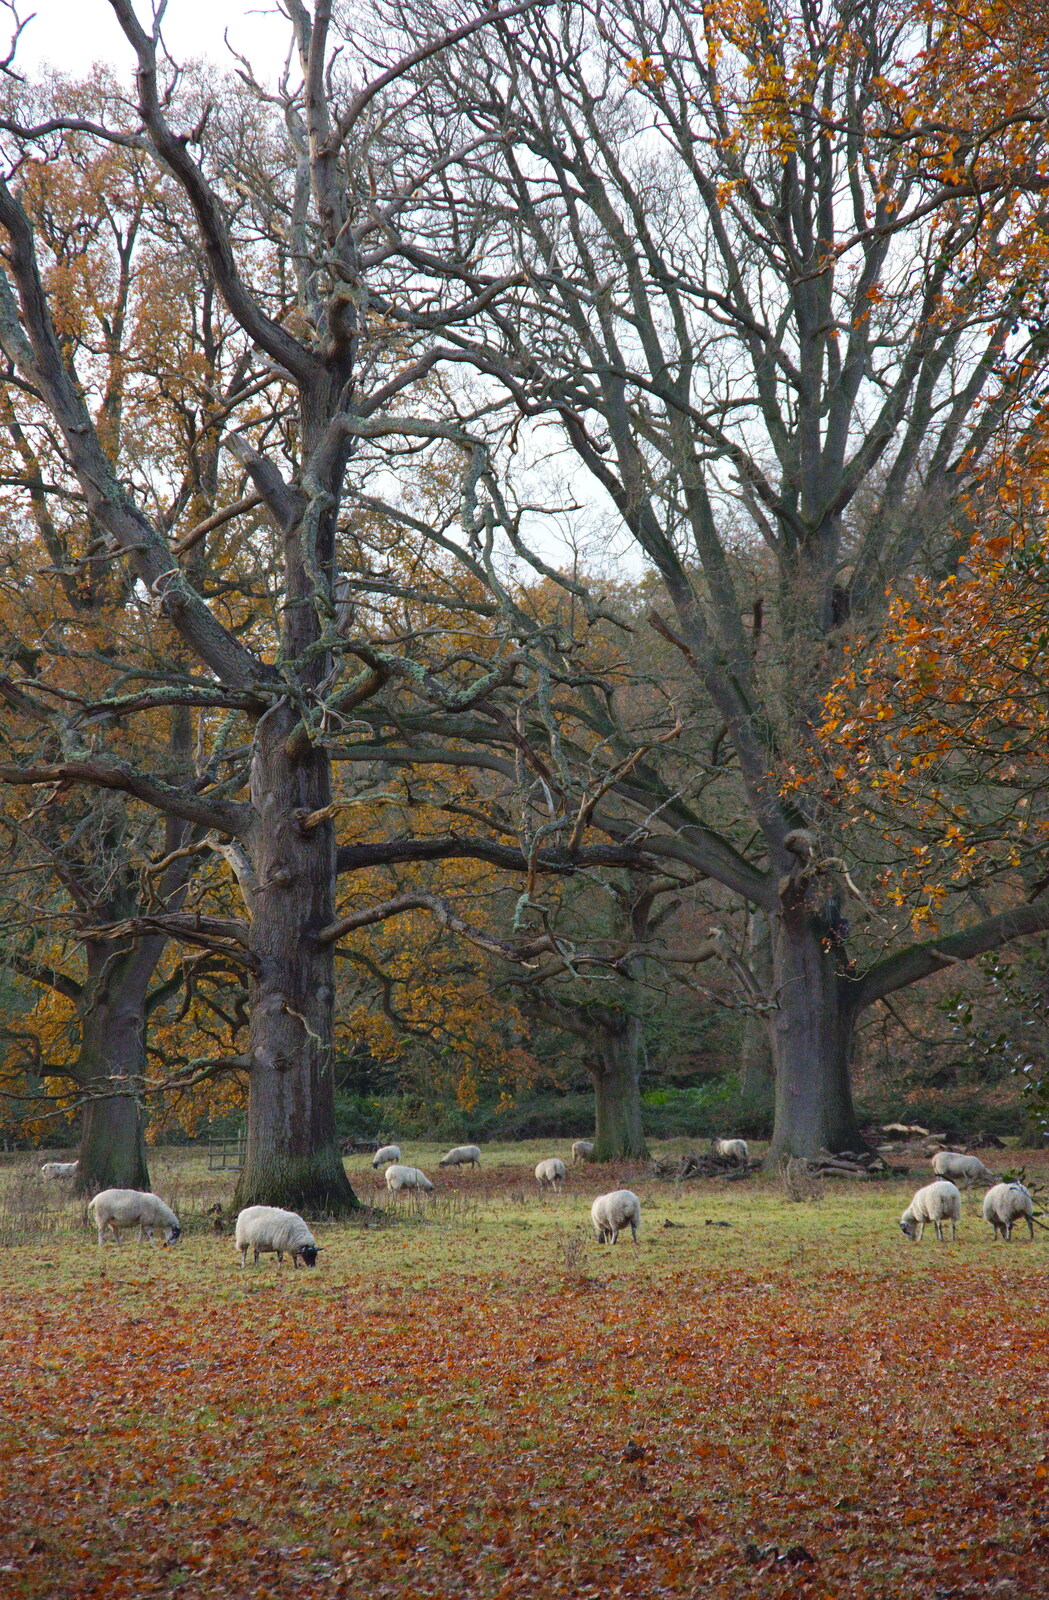 Sheep graze in an autumn scene from The Tiles of Ickworth House, Horringer, Suffolk - 30th November 2019